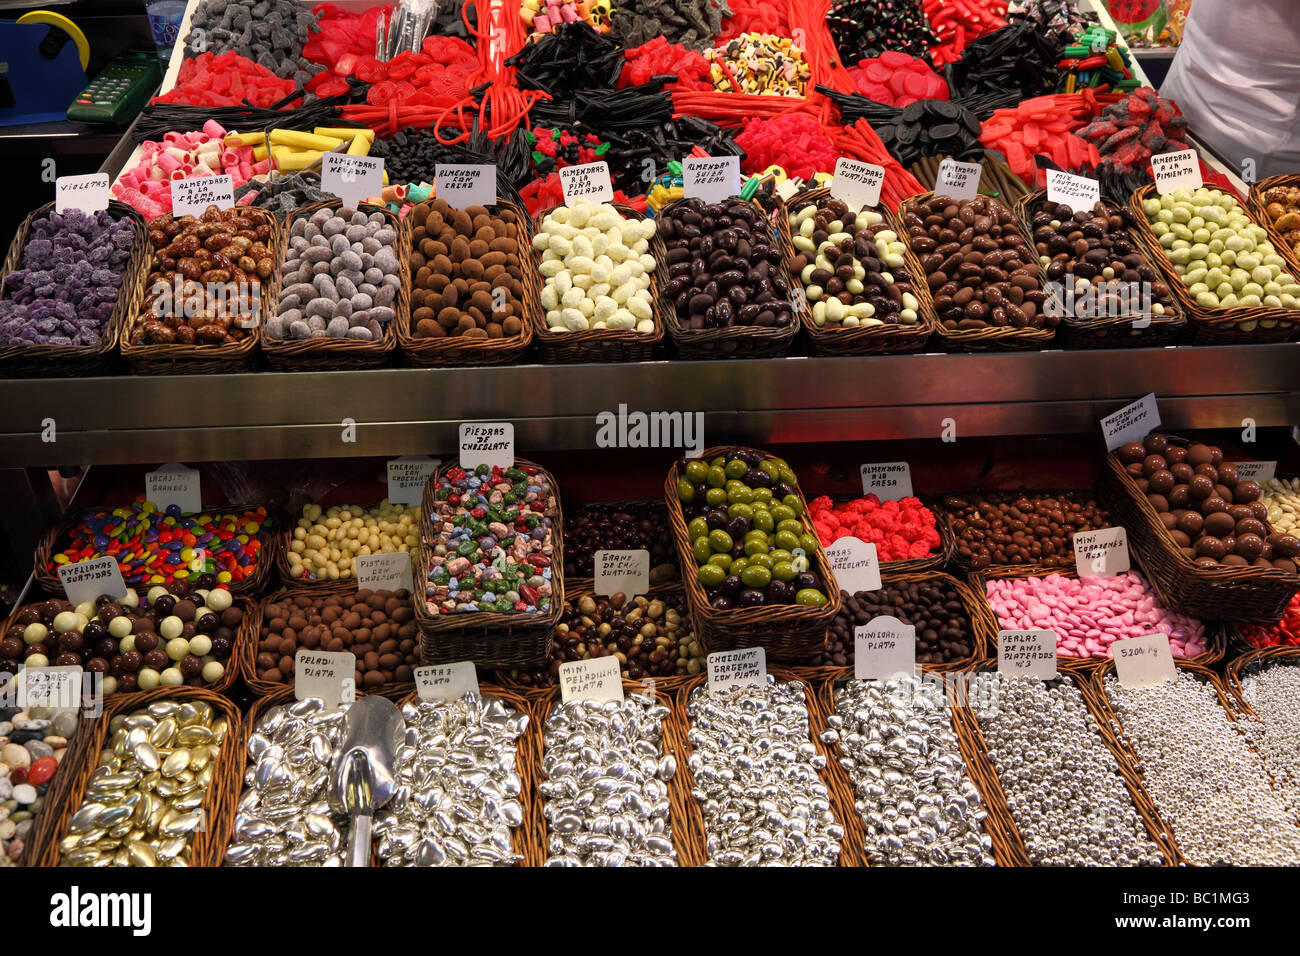 The History of the Chocolate Bonbon - Sanaa Chocolates